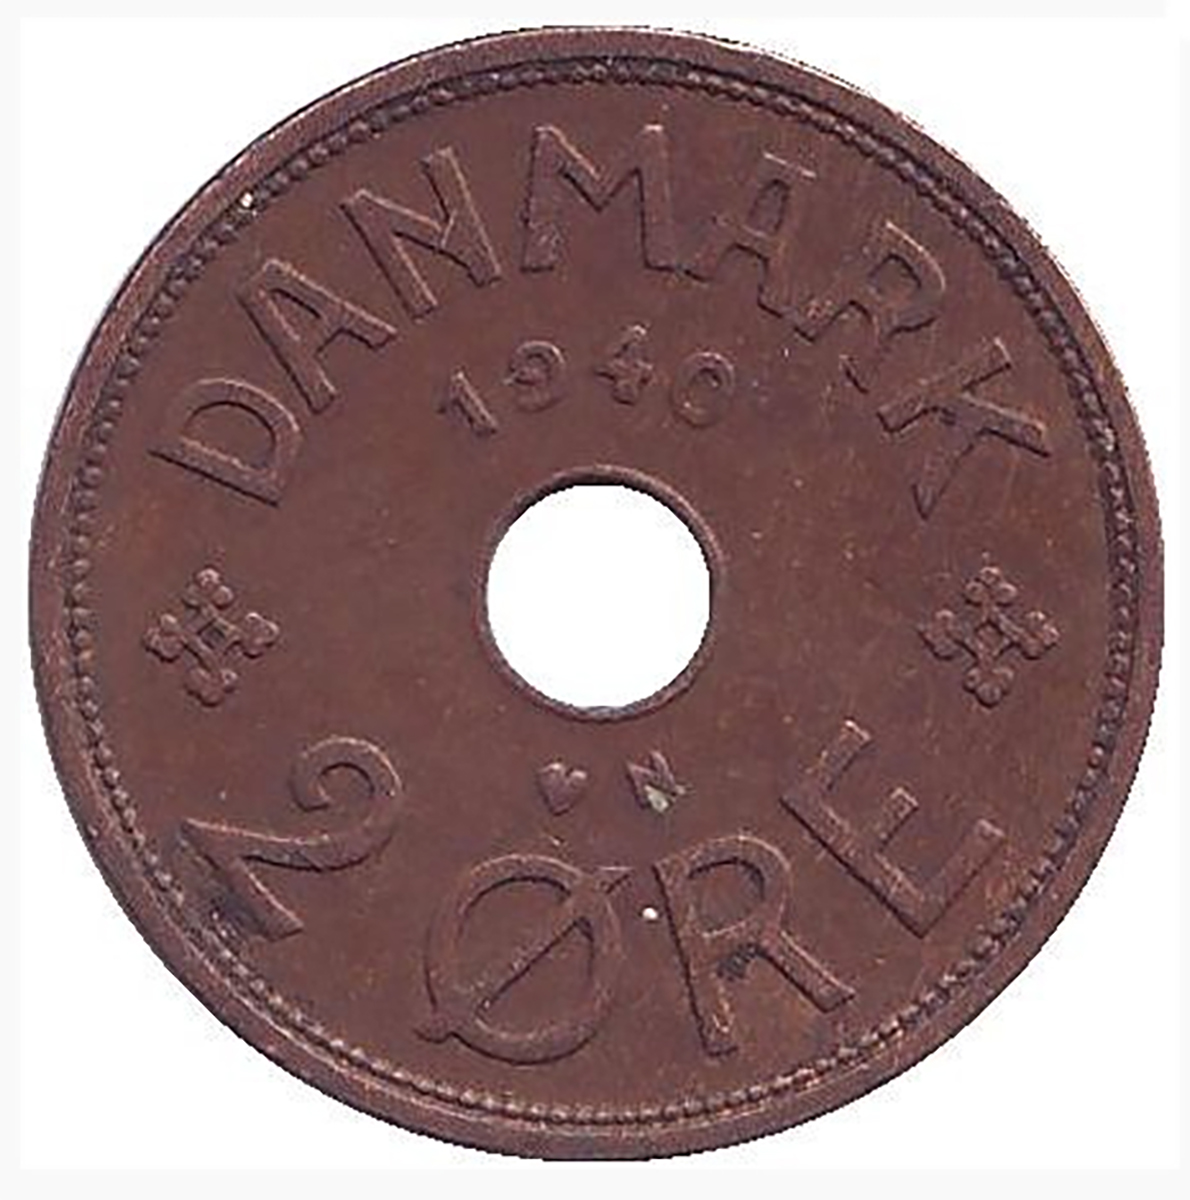 Монета номиналом 2 эре. Дания, 1940 год.